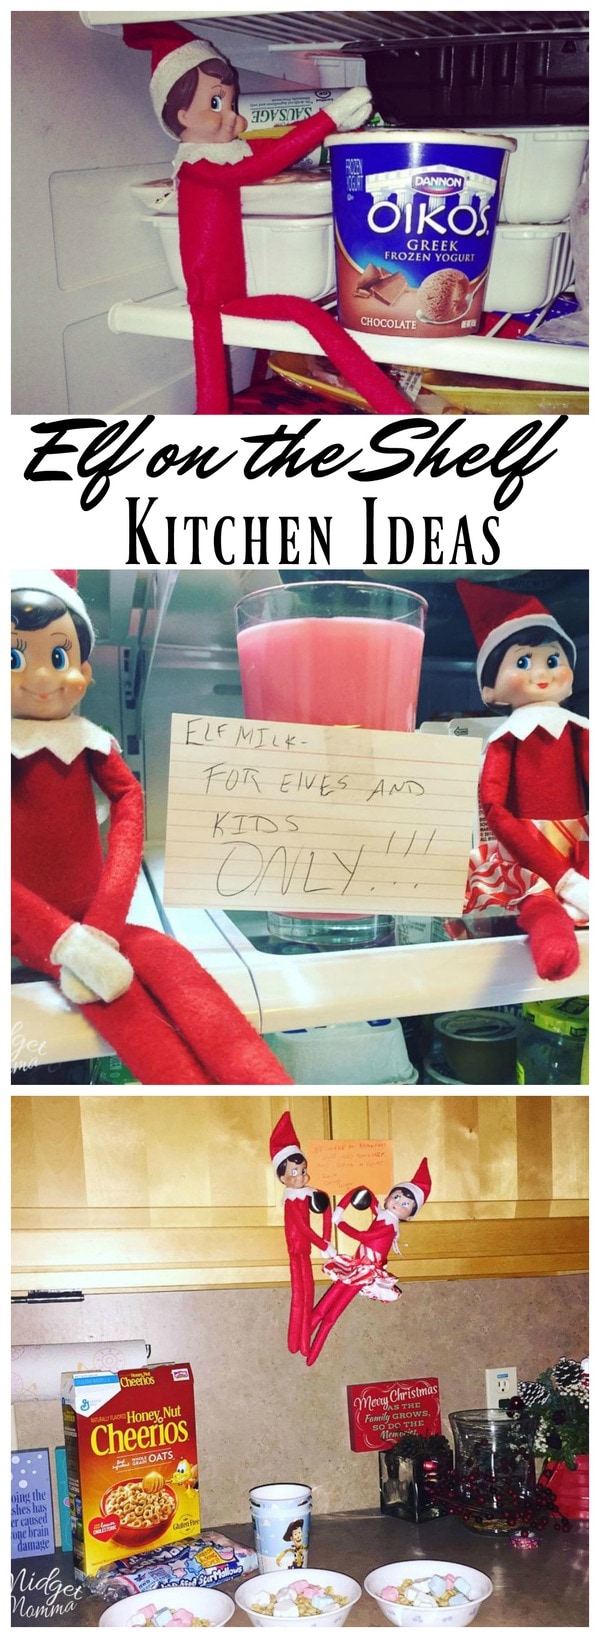 Easy & Fun Elf on the Shelf Kitchen Ideas Kids will love